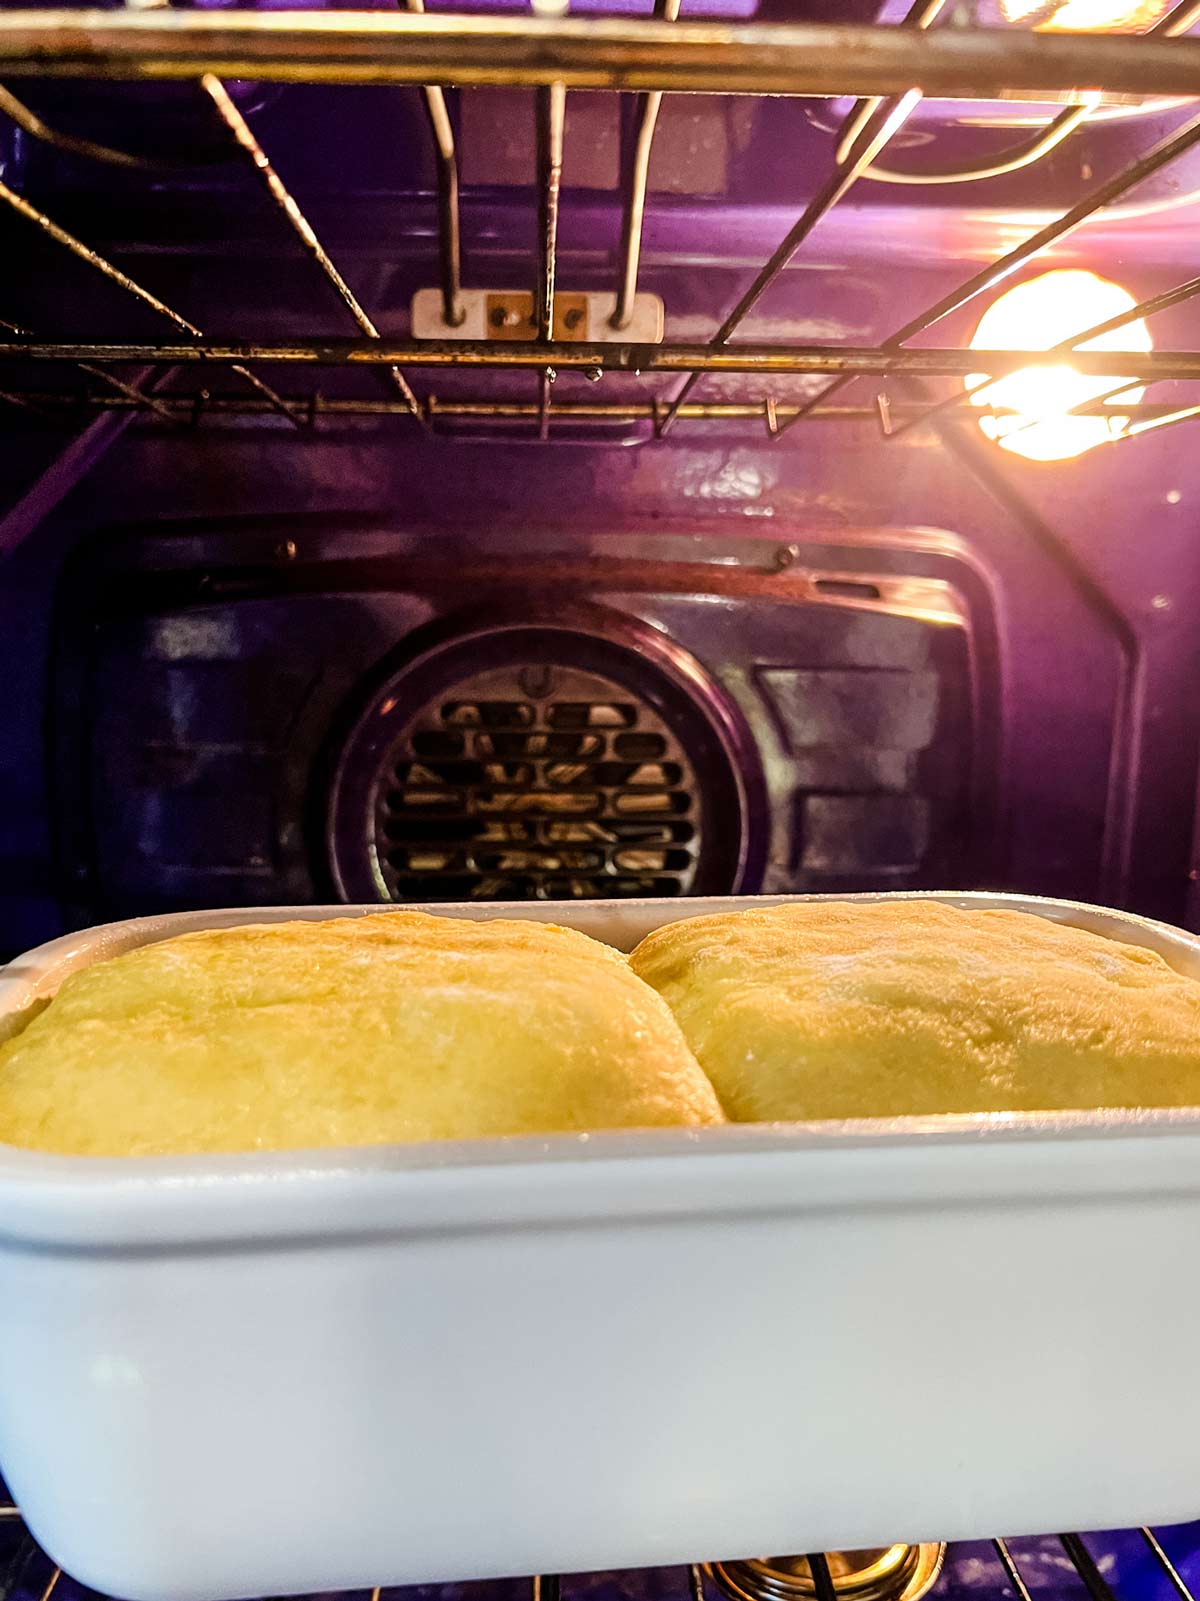 Brioche bread dough rising on the proof setting in the oven.